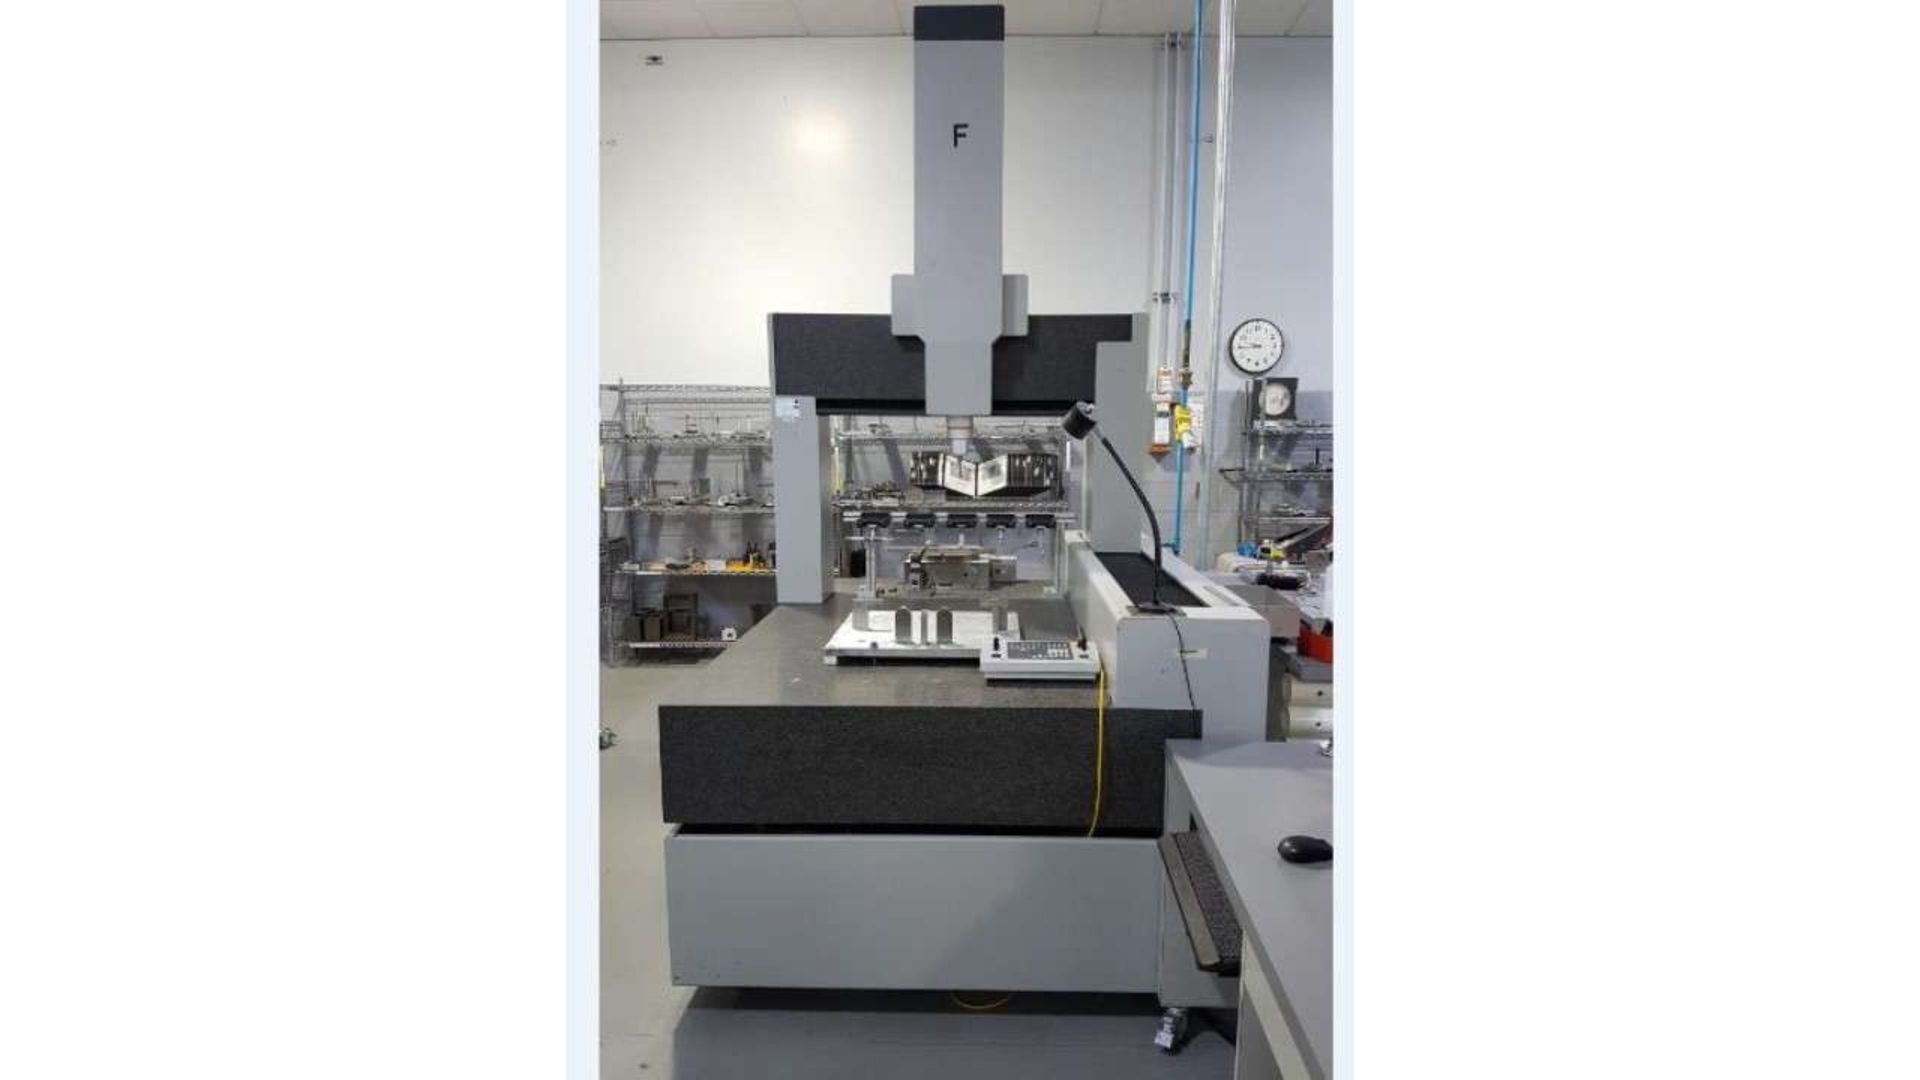 Zeiss UMC 850 Coordinate Measuring Machine